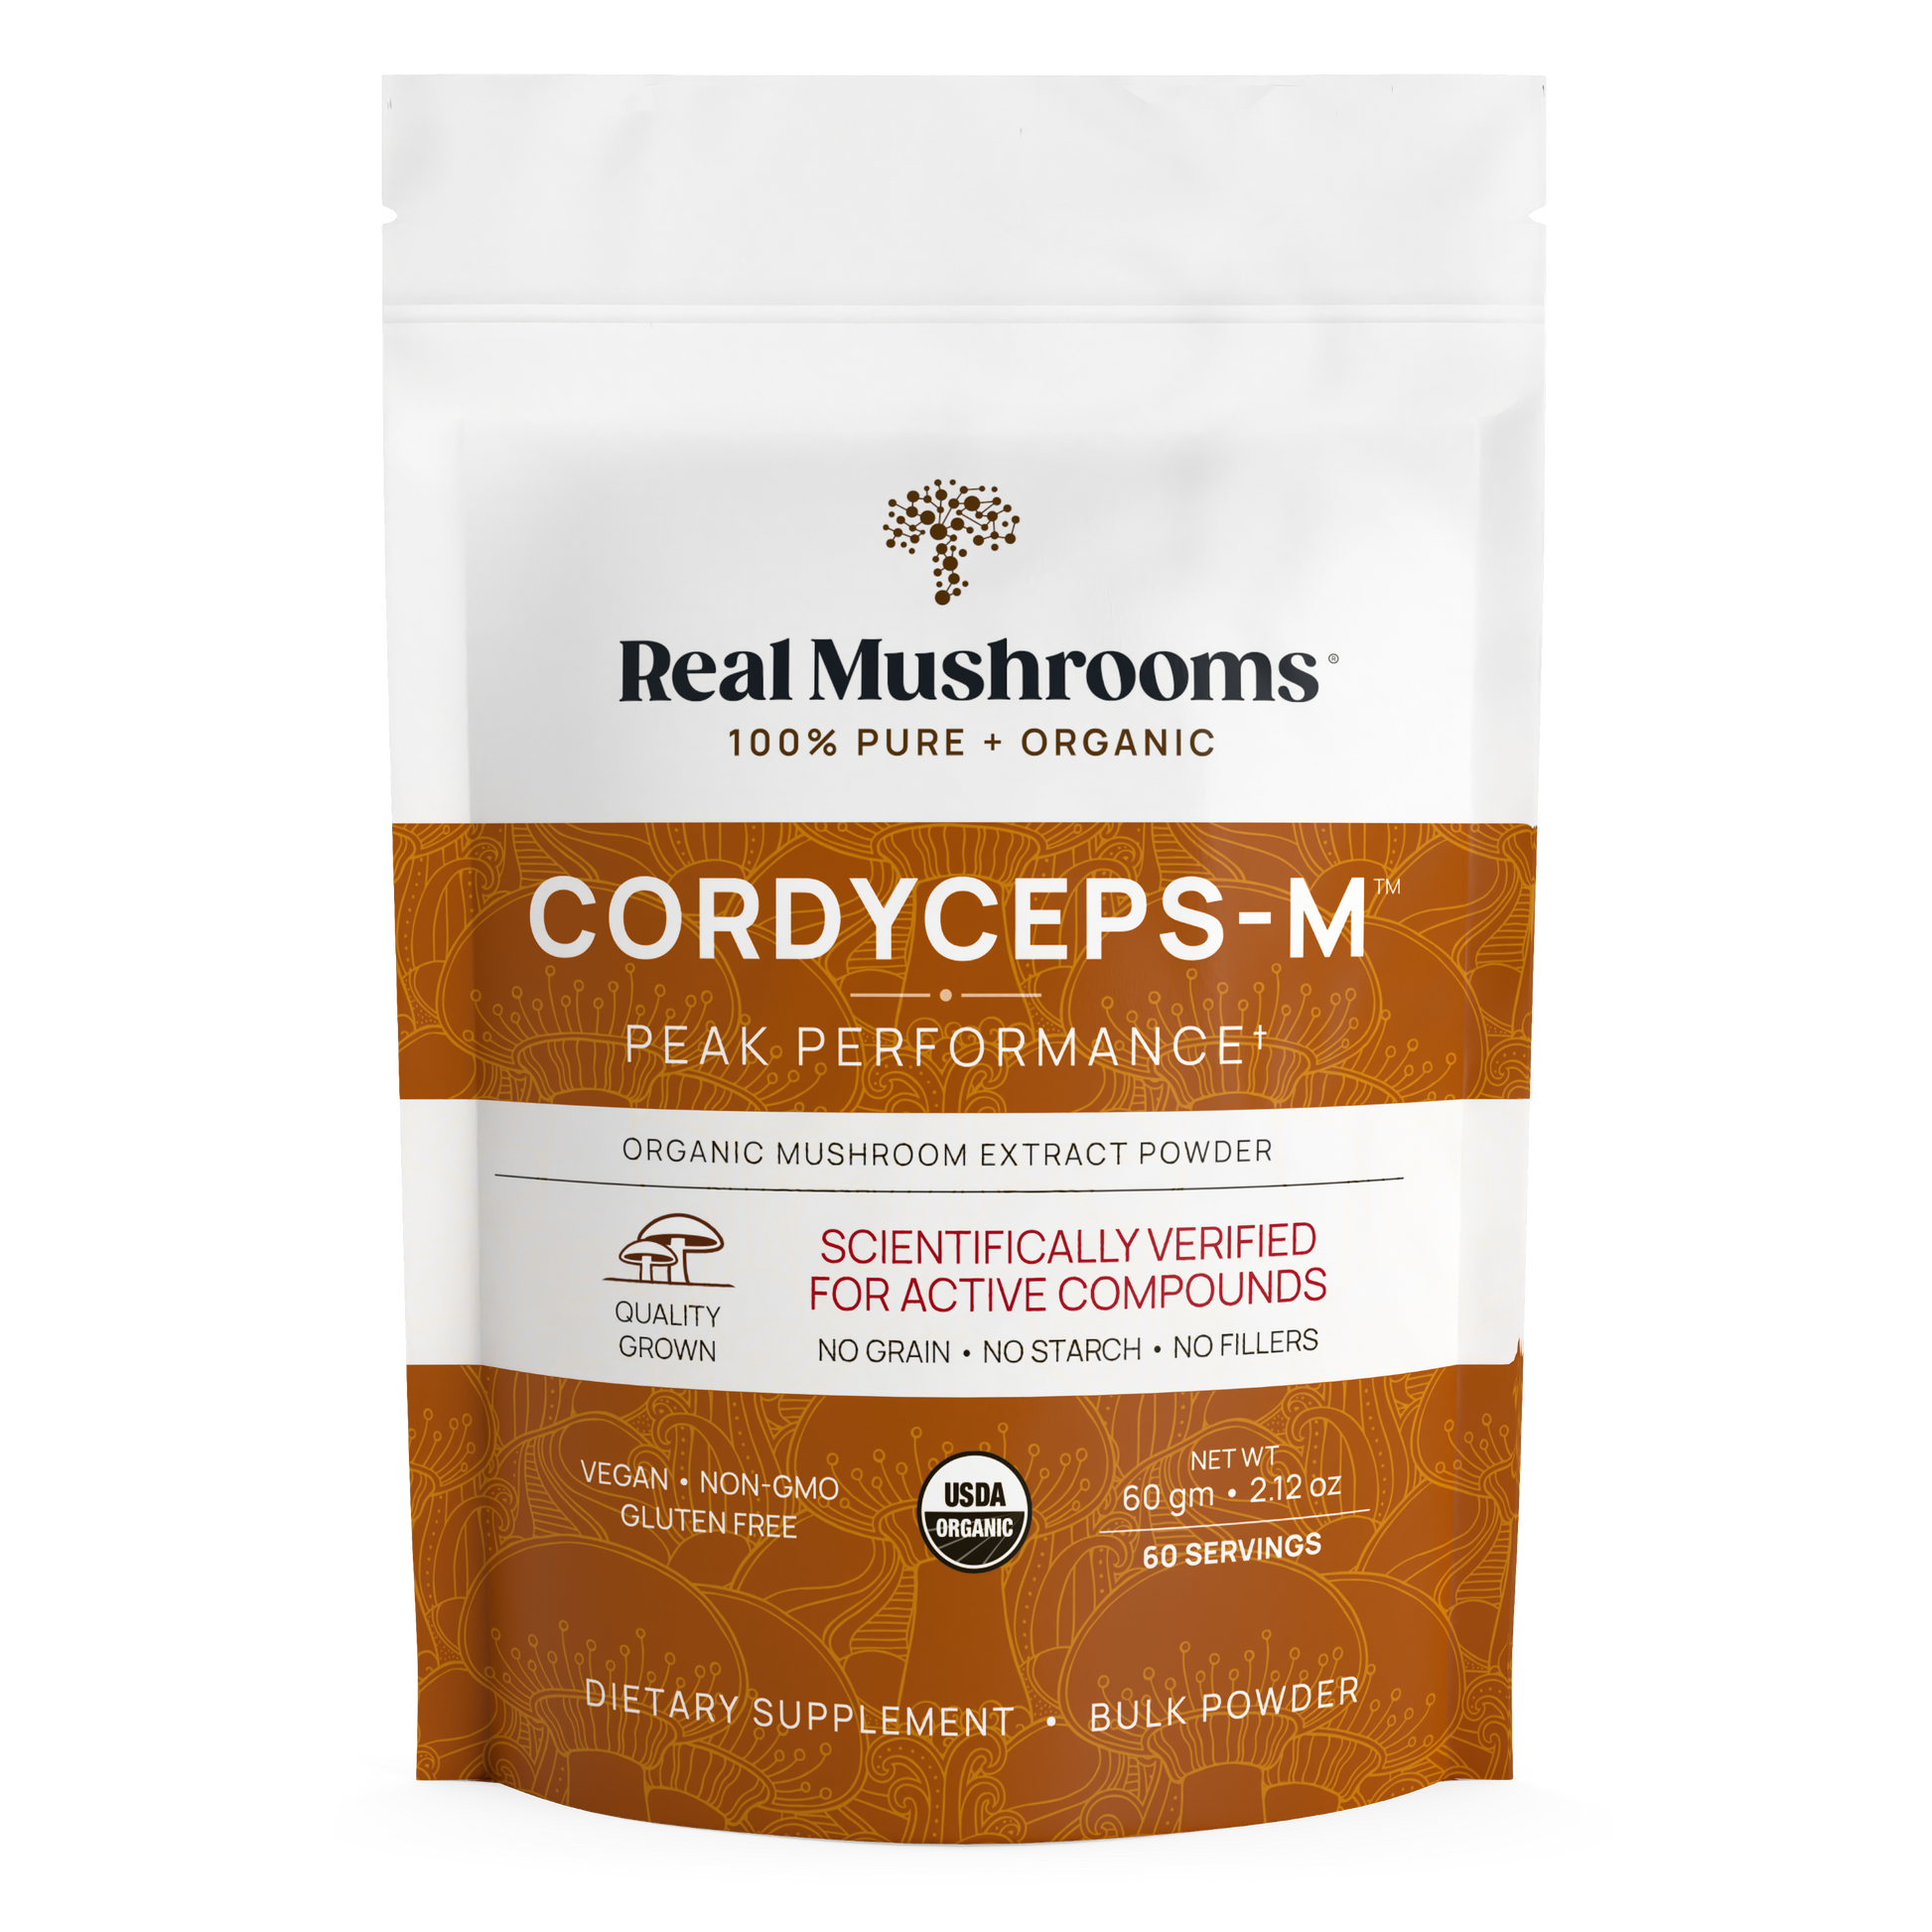 Real Mushrooms' Organic Cordyceps Mushroom Extract Powder for Pets